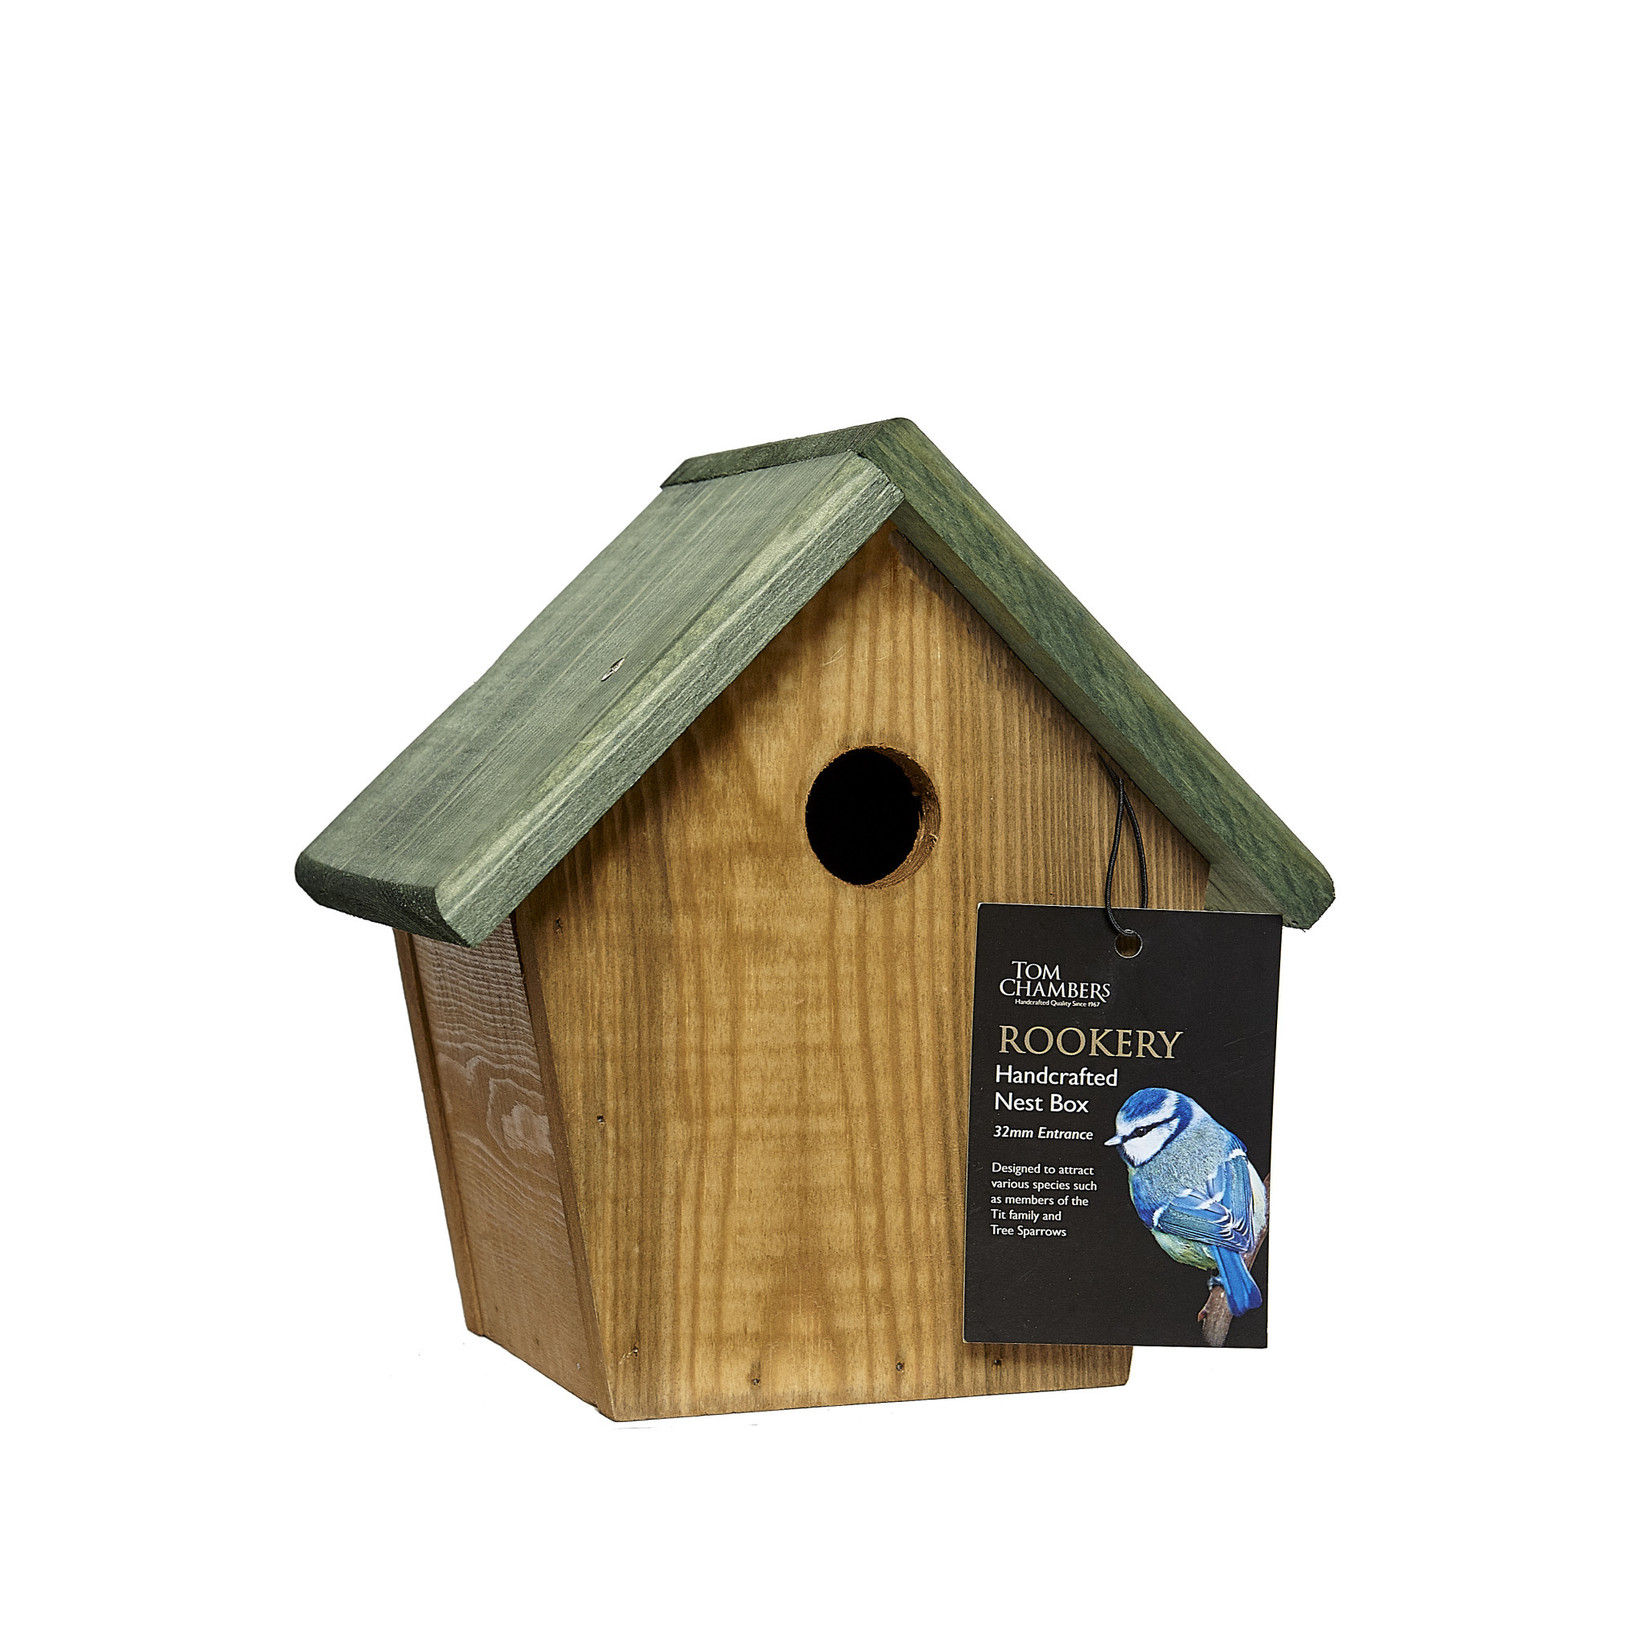 Tom Chambers Rookery Wild Bird Nest Box (FSC)